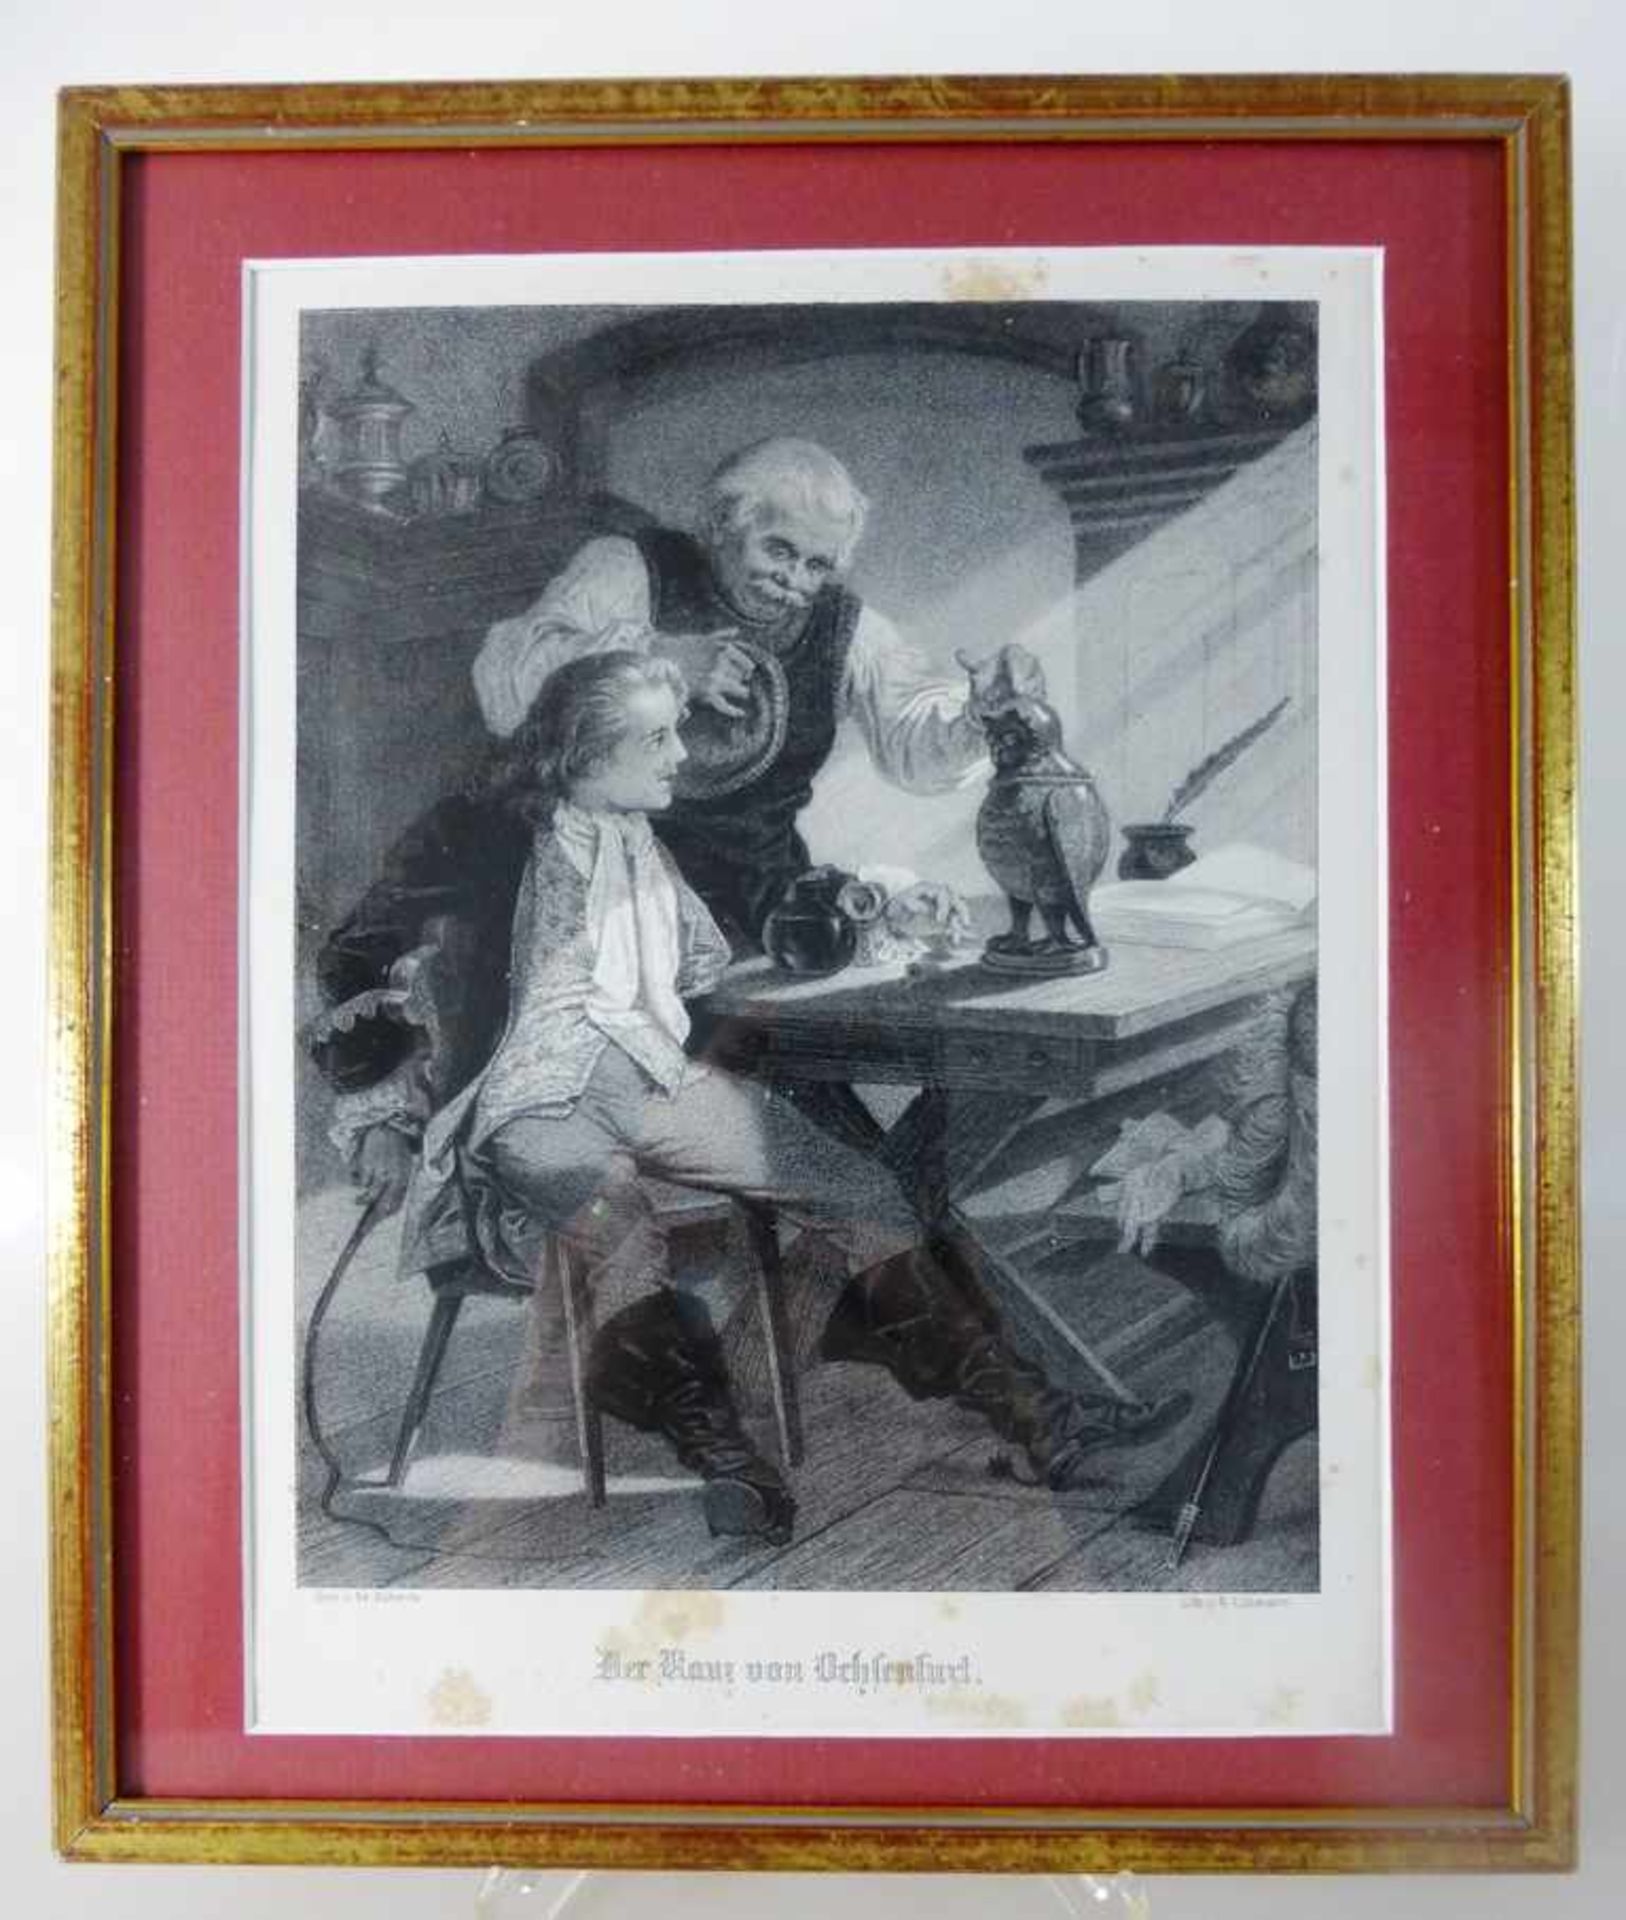 Lithografie "Der Kauz von Ochsenfurt", A. Lüttmann, fleckig, u.PP i.R. 28cm x 24cm